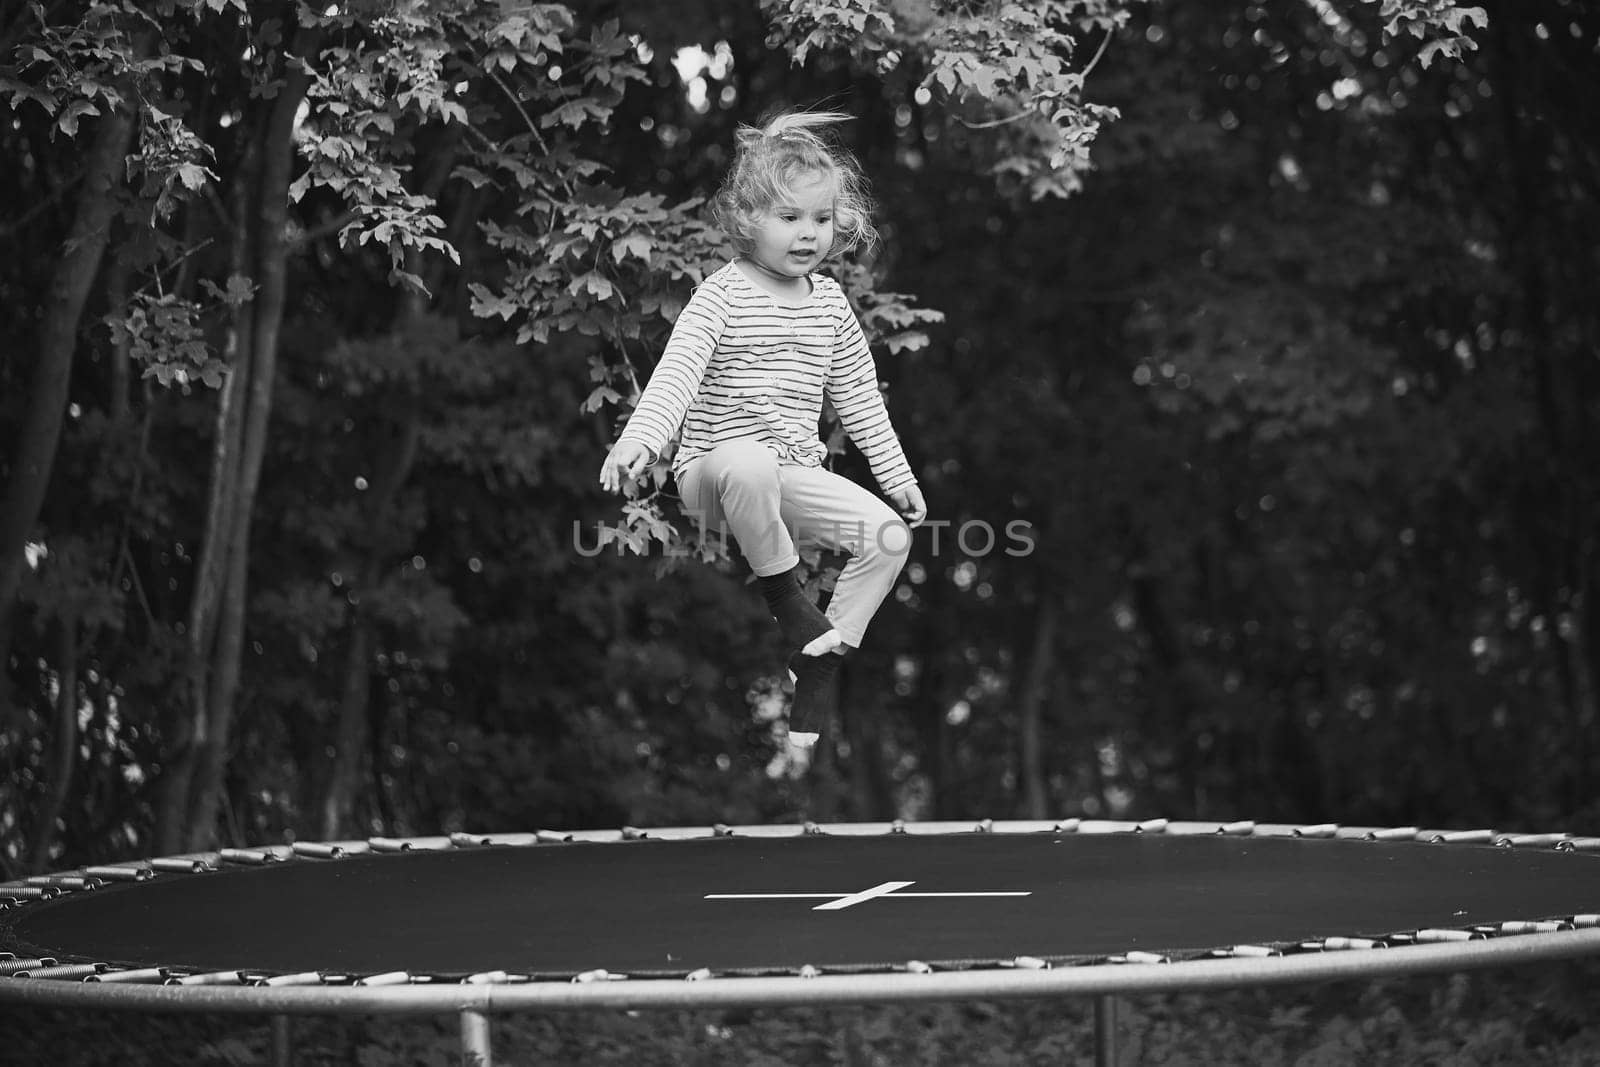 Child jumping on a trampoline in the evening garden in Denmark by Viktor_Osypenko